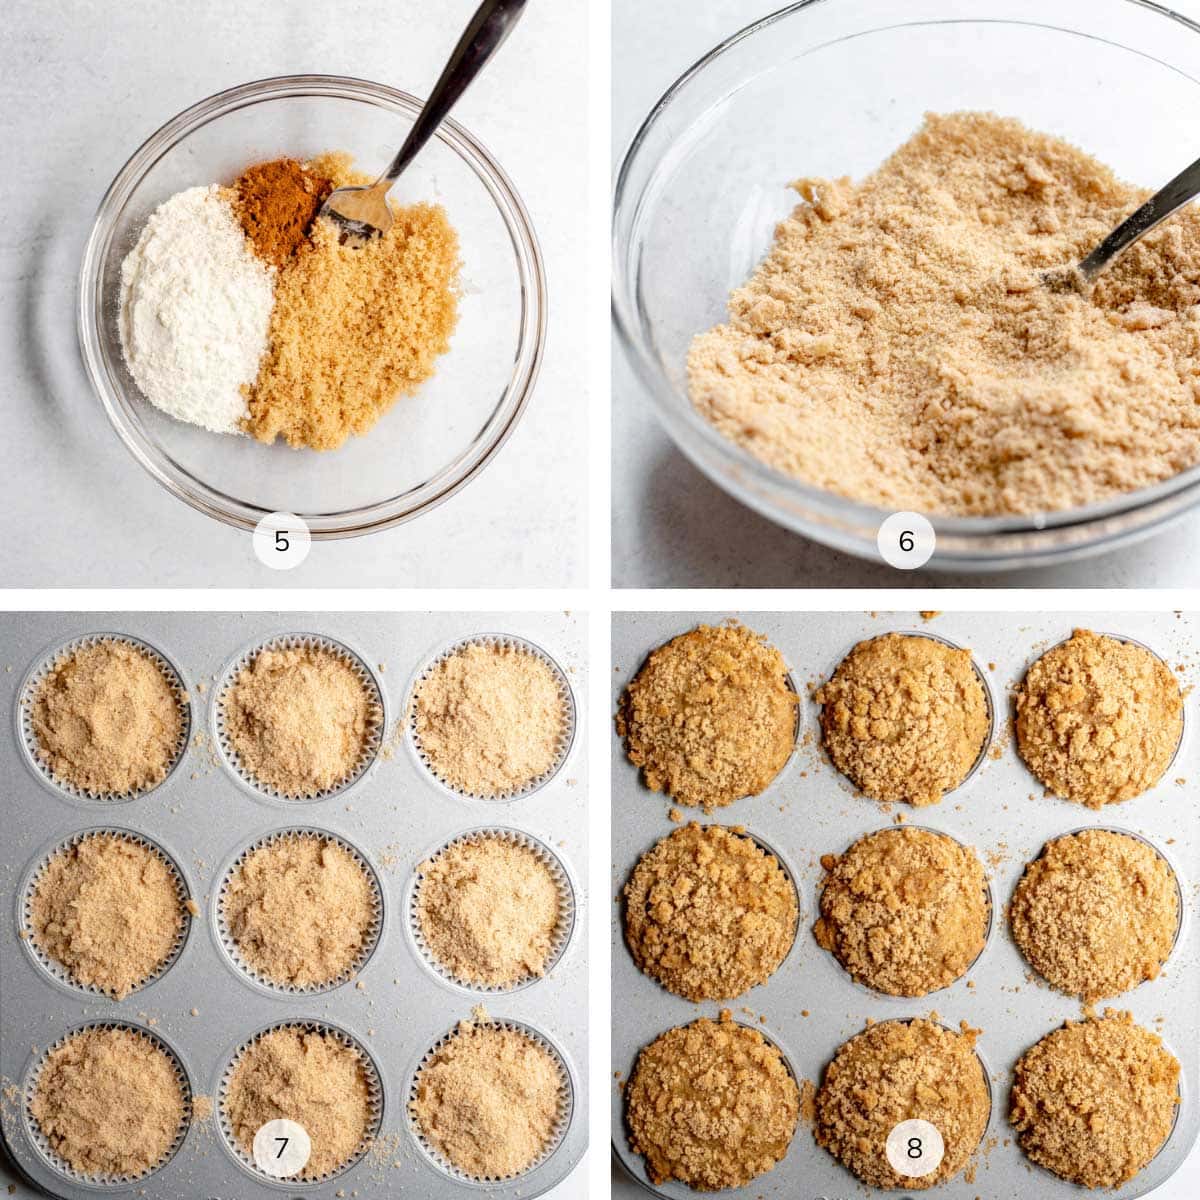 Steps of making banana crumb muffins labeled 5, 6, 7, 8